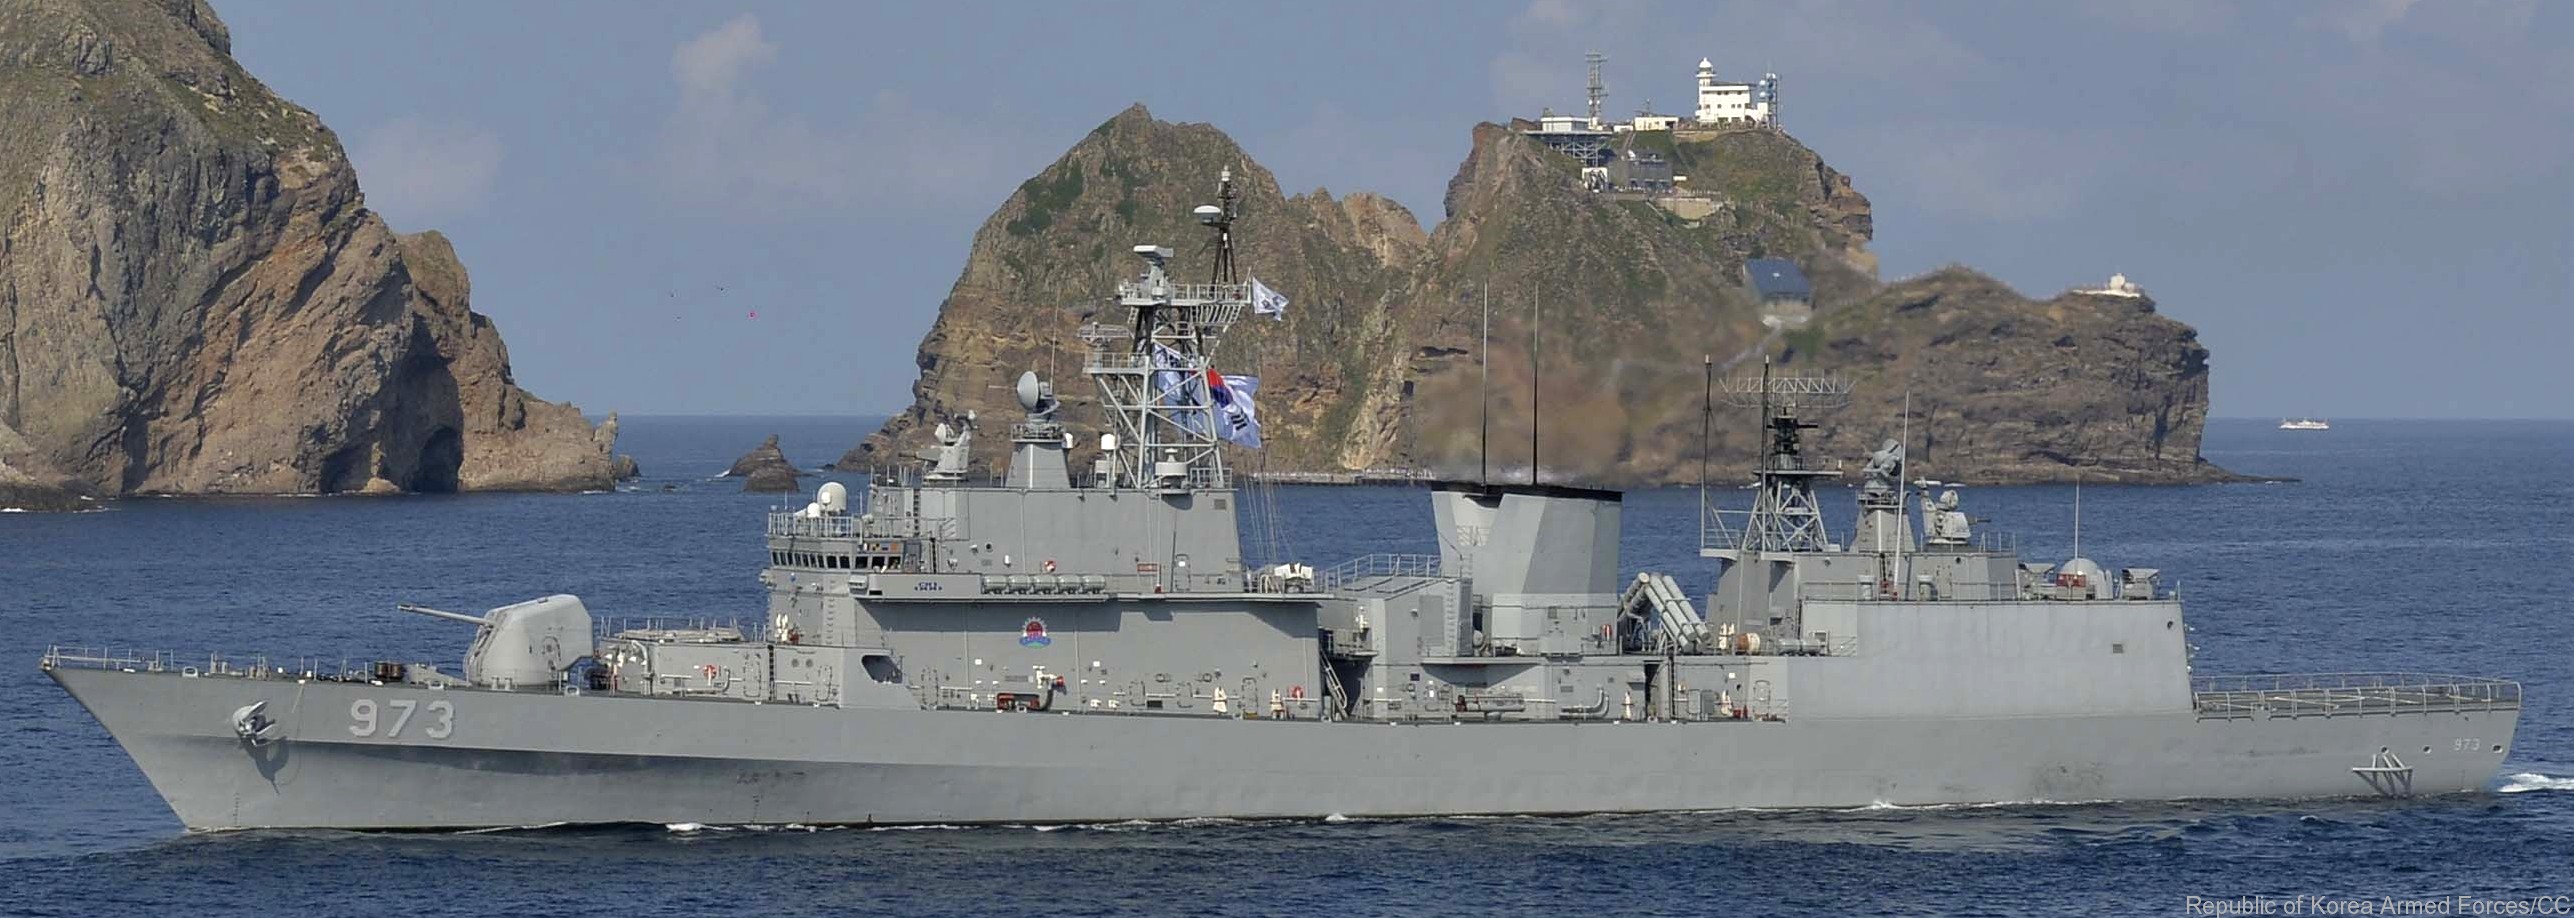 ddh-973 roks yang man-chun gwanggaeto the great class destroyer ddh kdx-i korean navy rokn sea sparrow sam missile lynx helicopter 10x